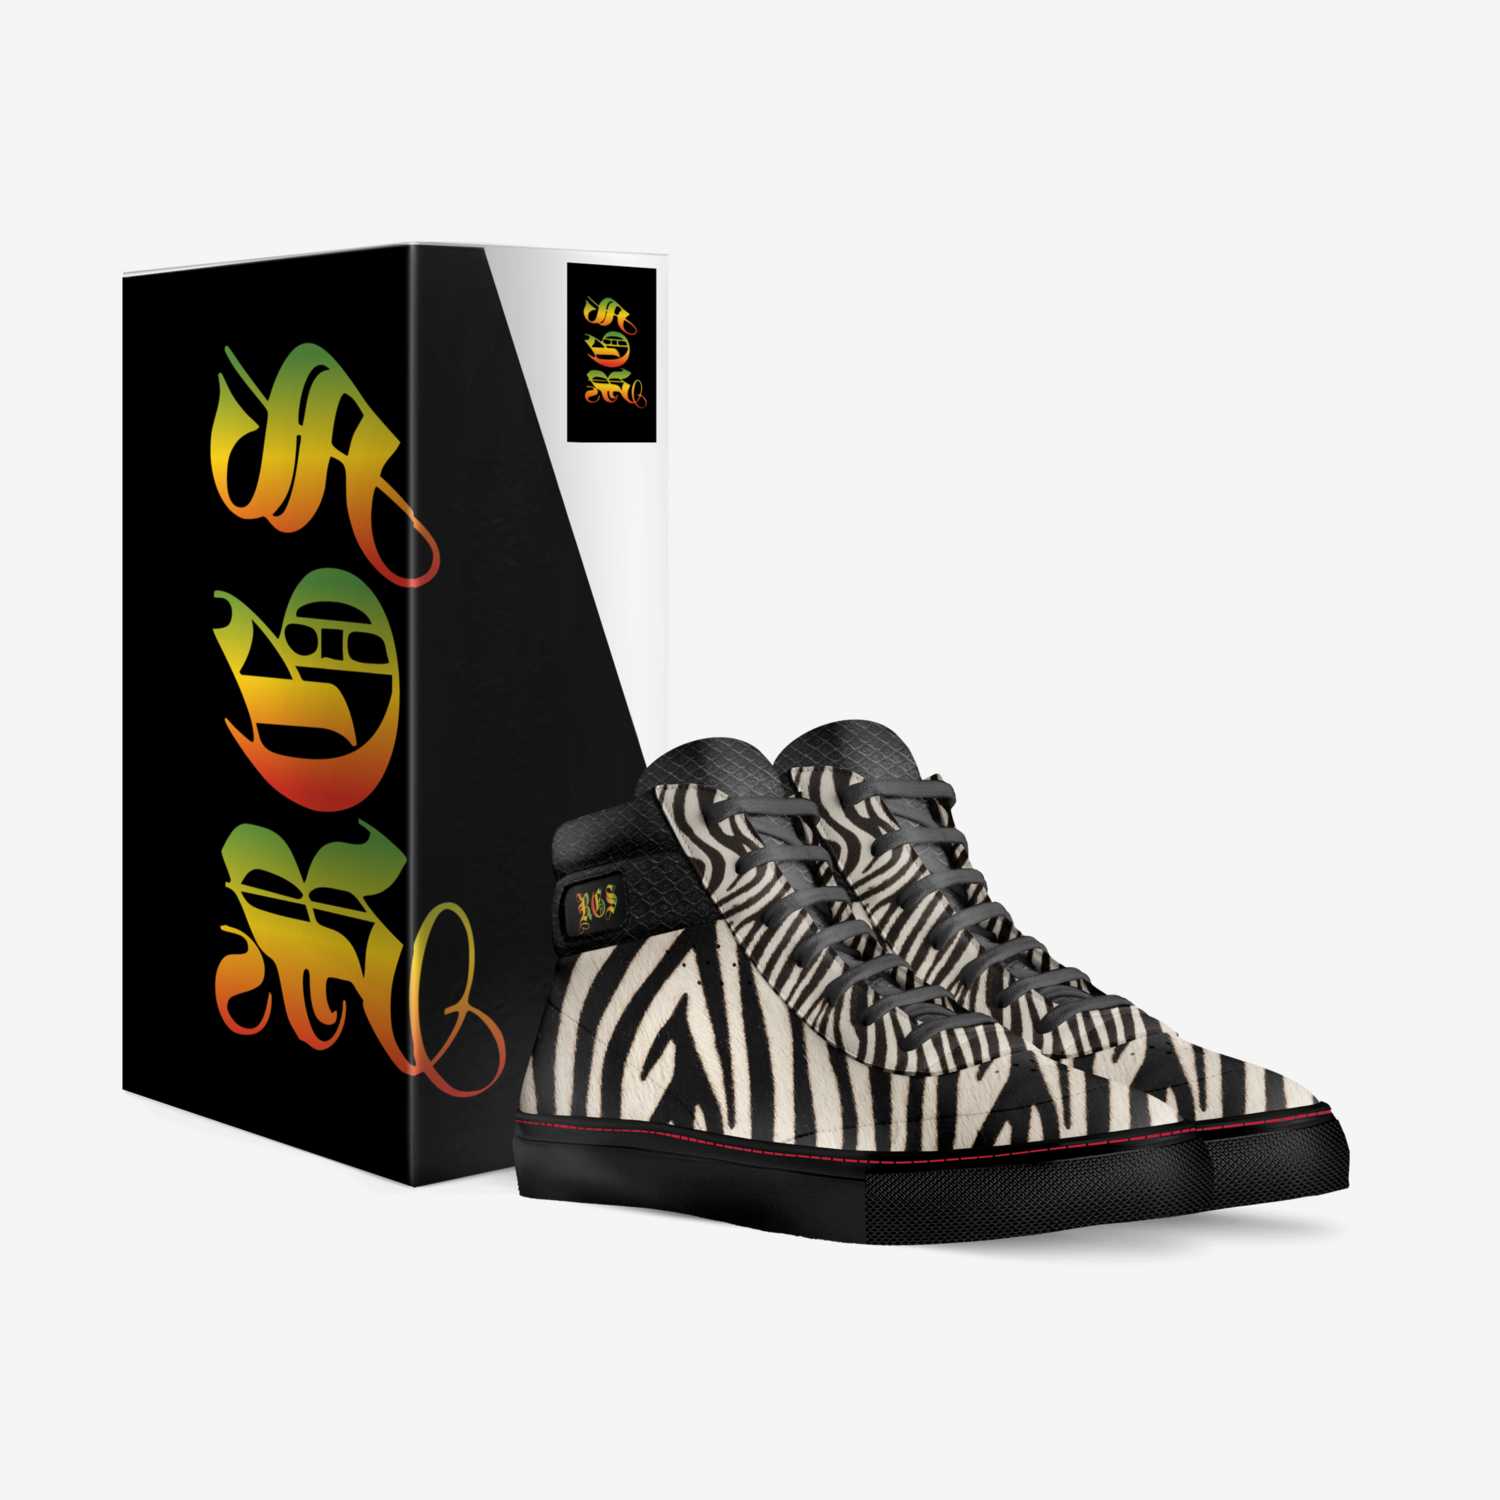 Rasta Street custom made in Italy shoes by Rasta Gear Shop | Box view